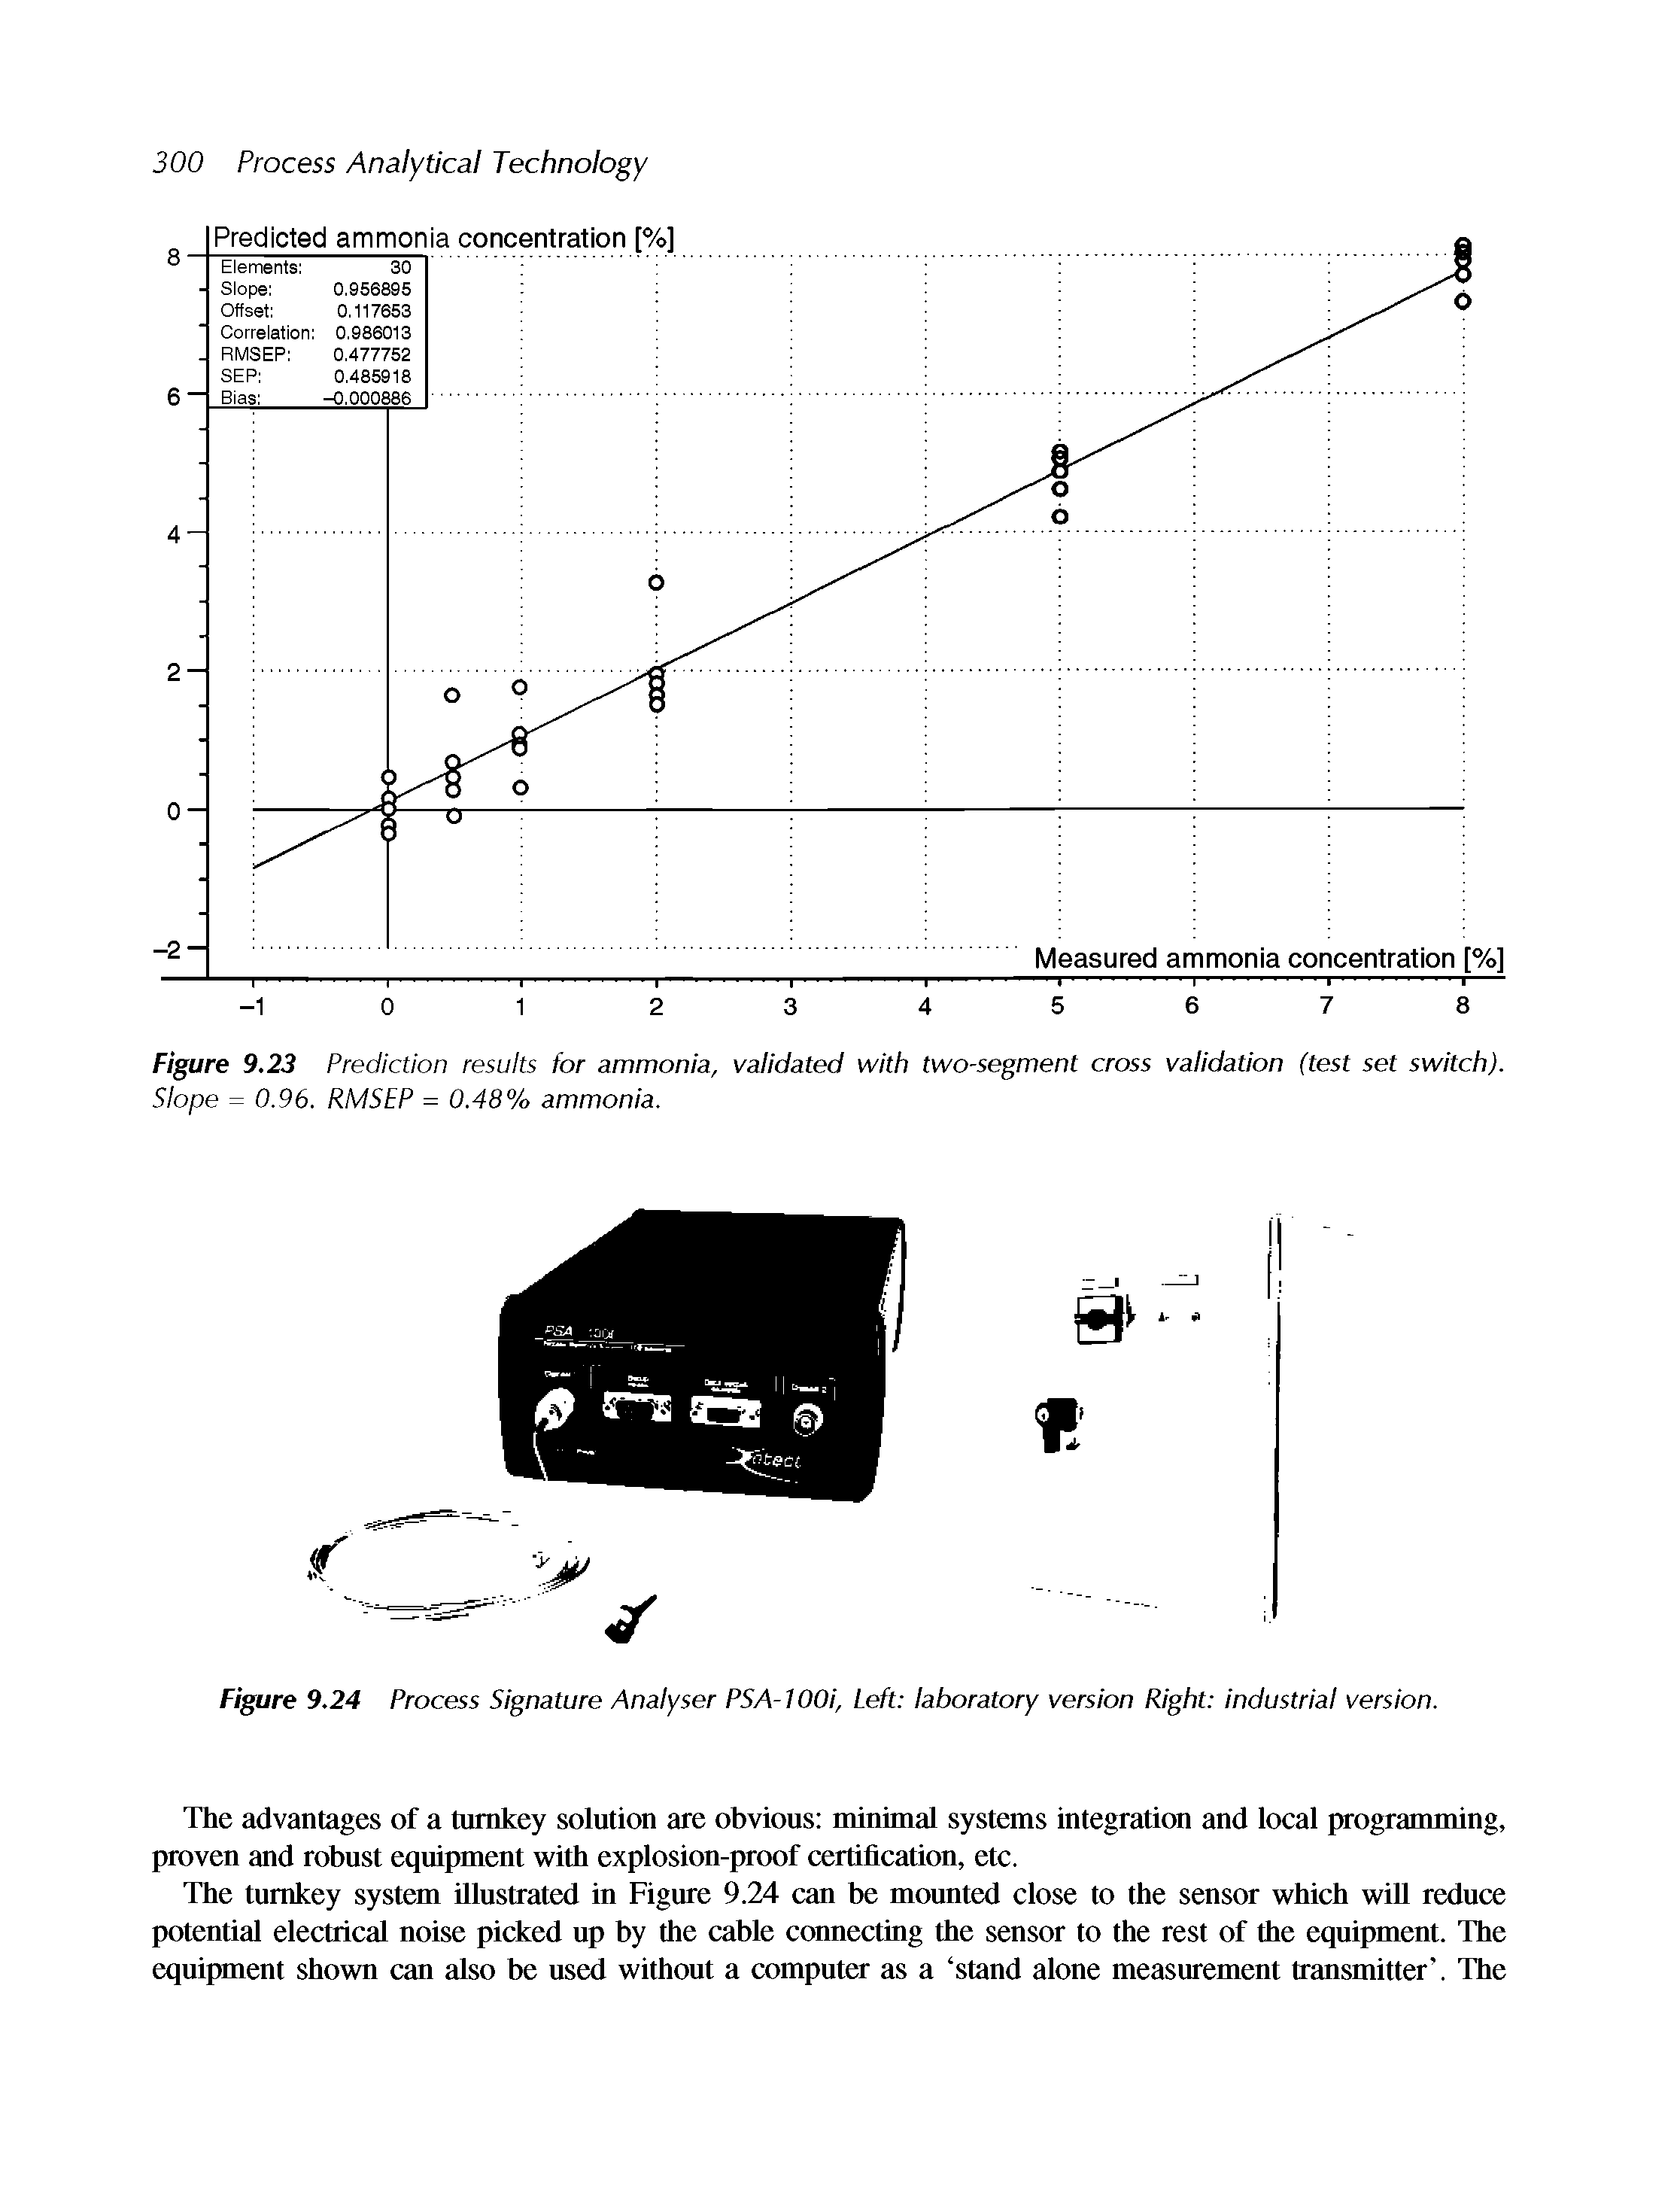 Figure 9.24 Process Signature Analyser PSA-IOOi, Left laboratory version Right industrial version.